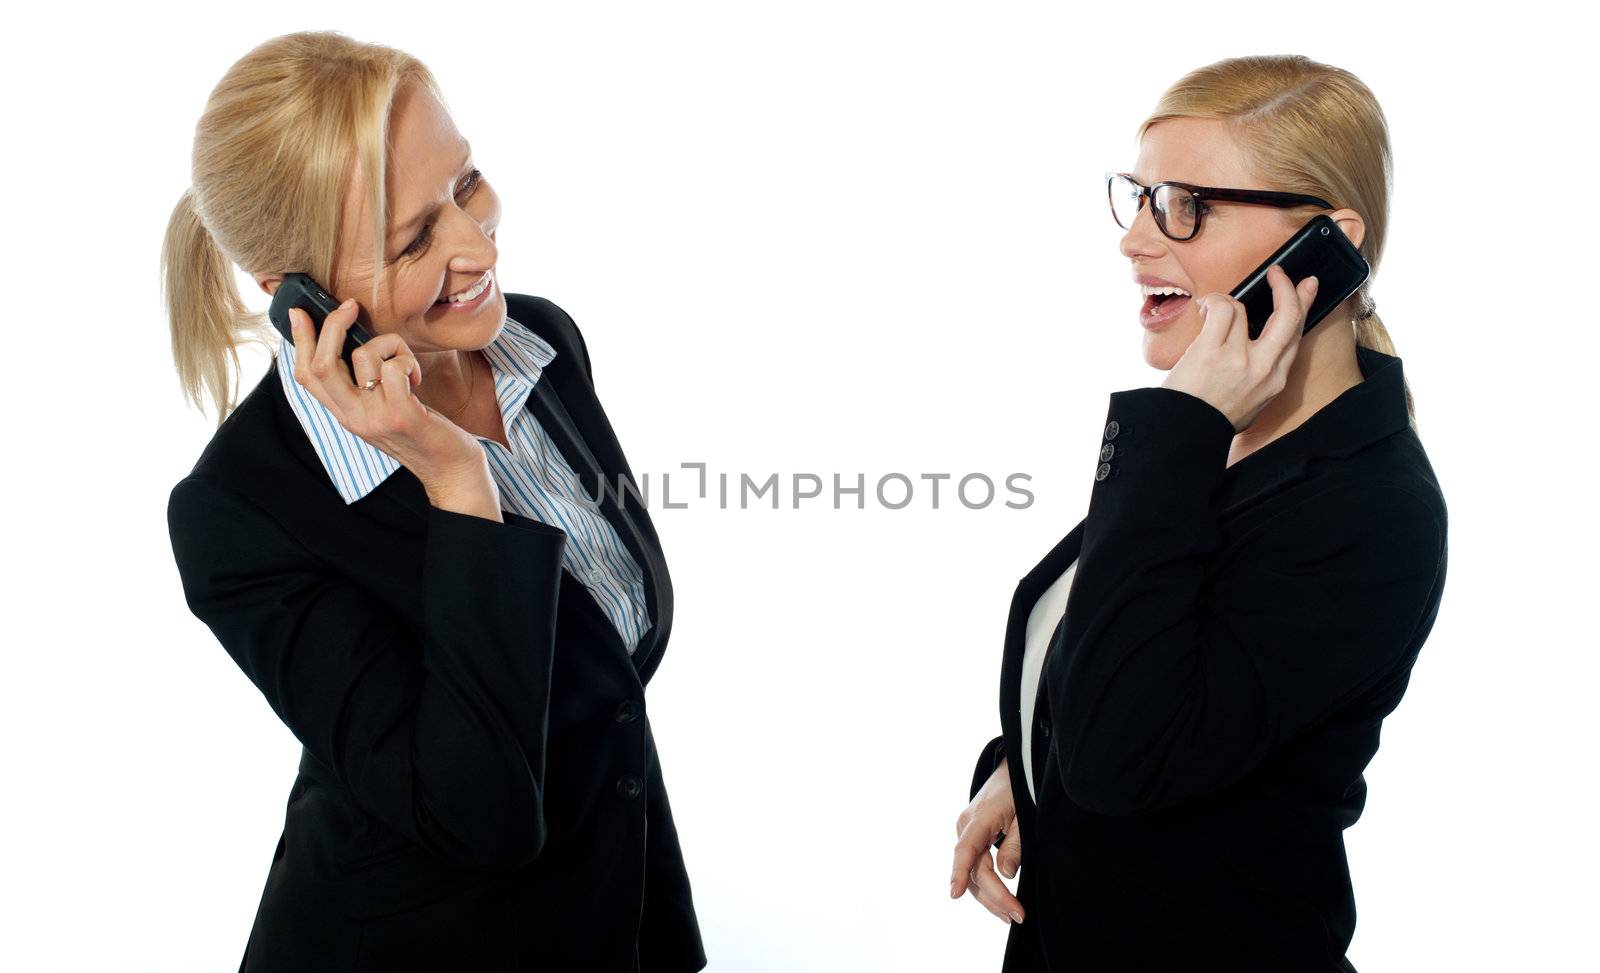 Businesswomen communicating via mobile phones isolated on white background